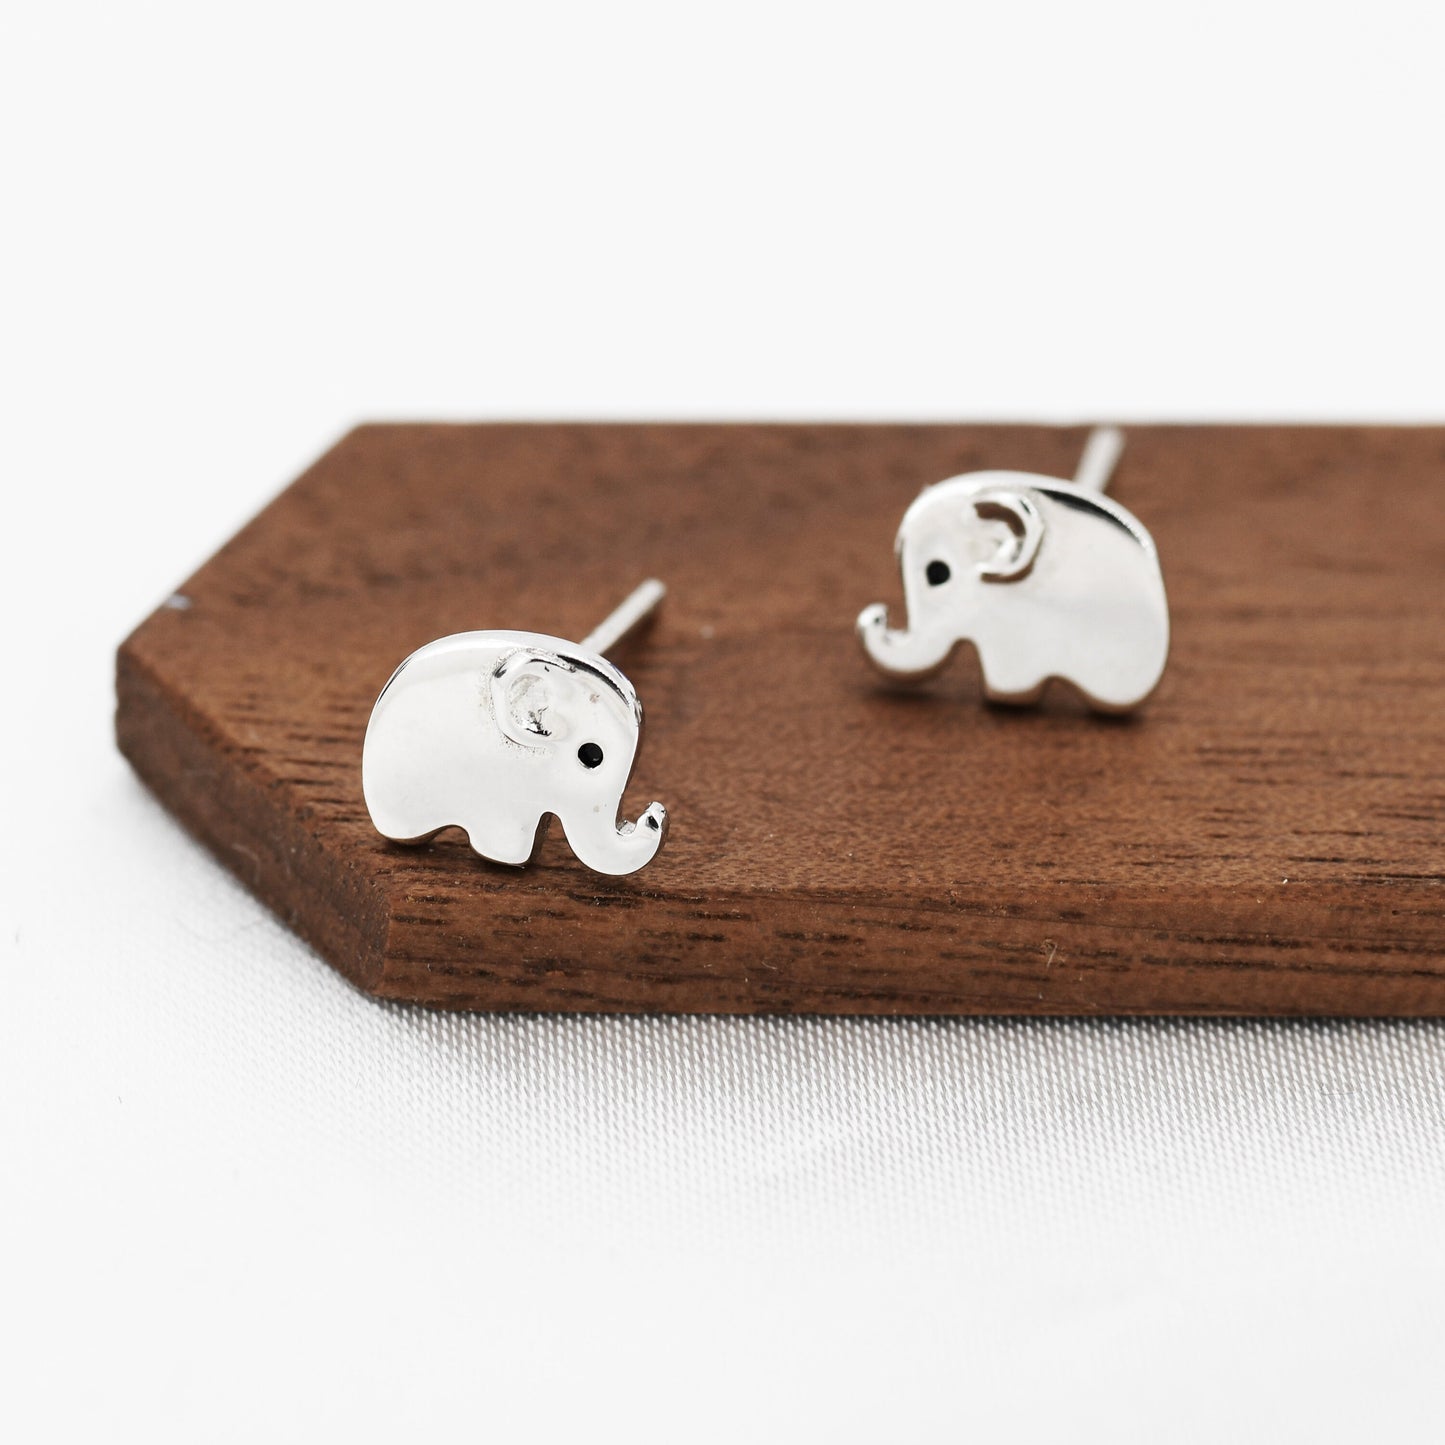 Cute Baby Elephant Stud Earrings in Sterling Silver, Tiny Elephant Earrings, Nature Inspired Animal Earrings